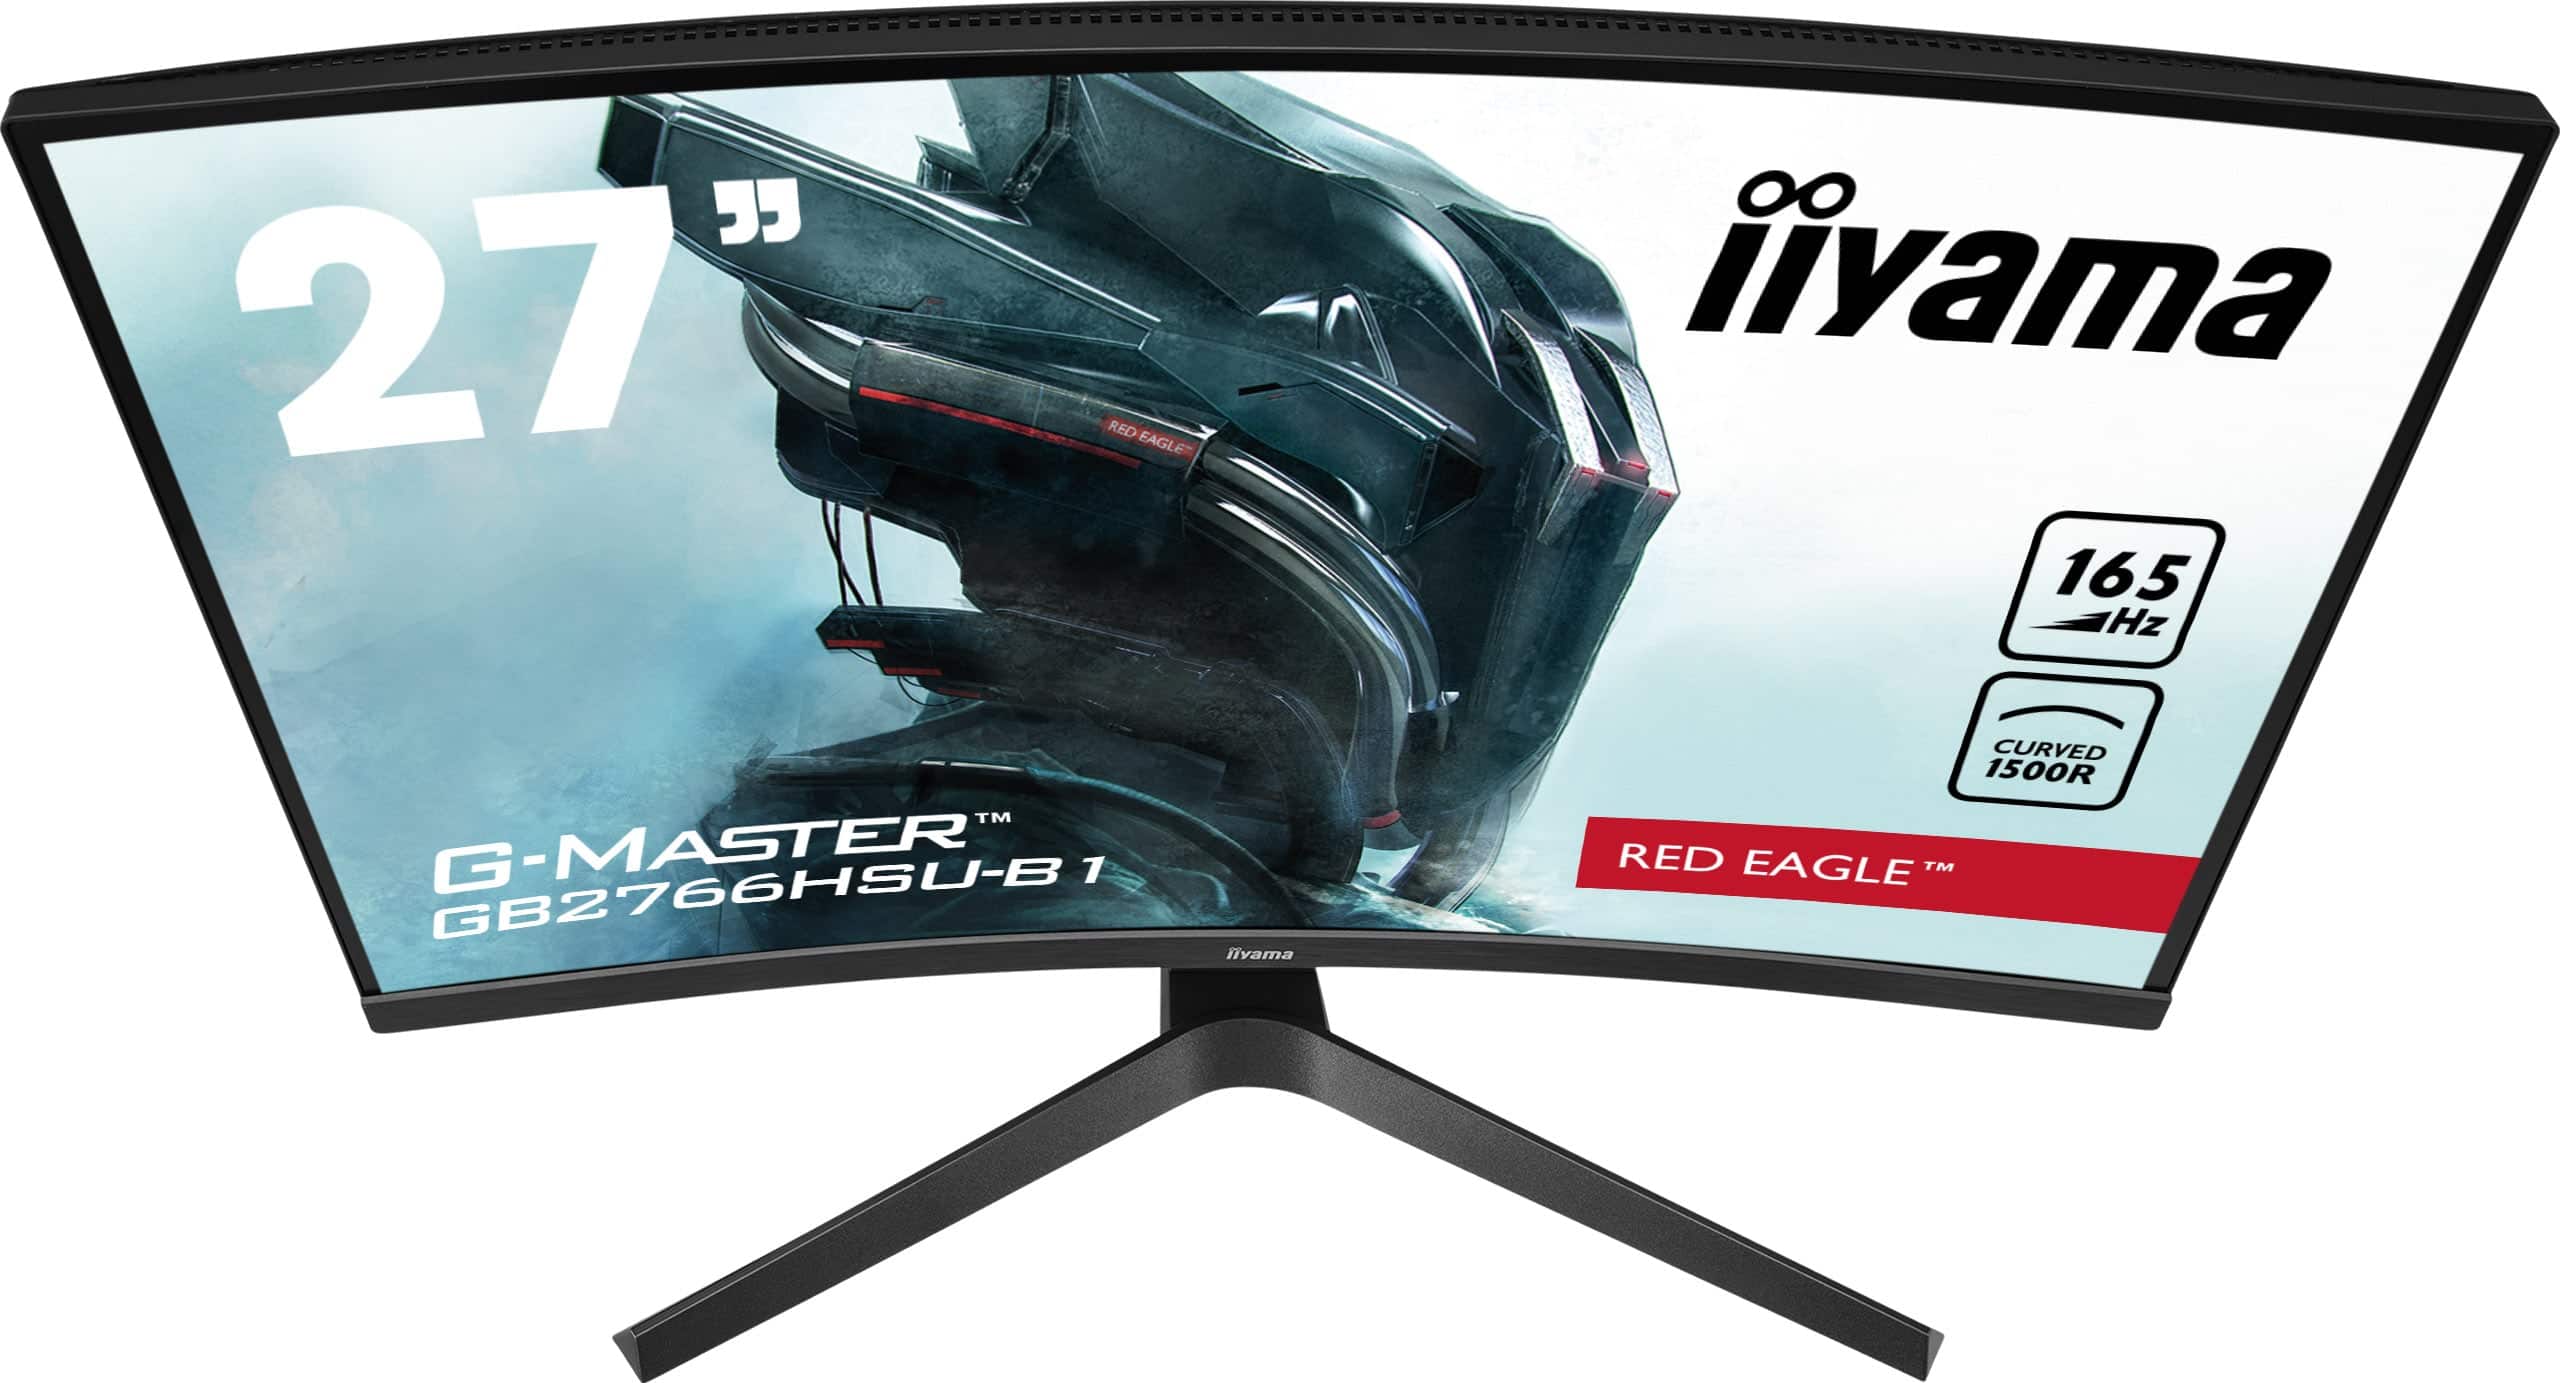 Iiyama G-MASTER GB2766HSU-B1 RED EAGLE | 27" | Full HD | 165Hz | Curved-Gaming-Monitor | Ausstelungsgerät